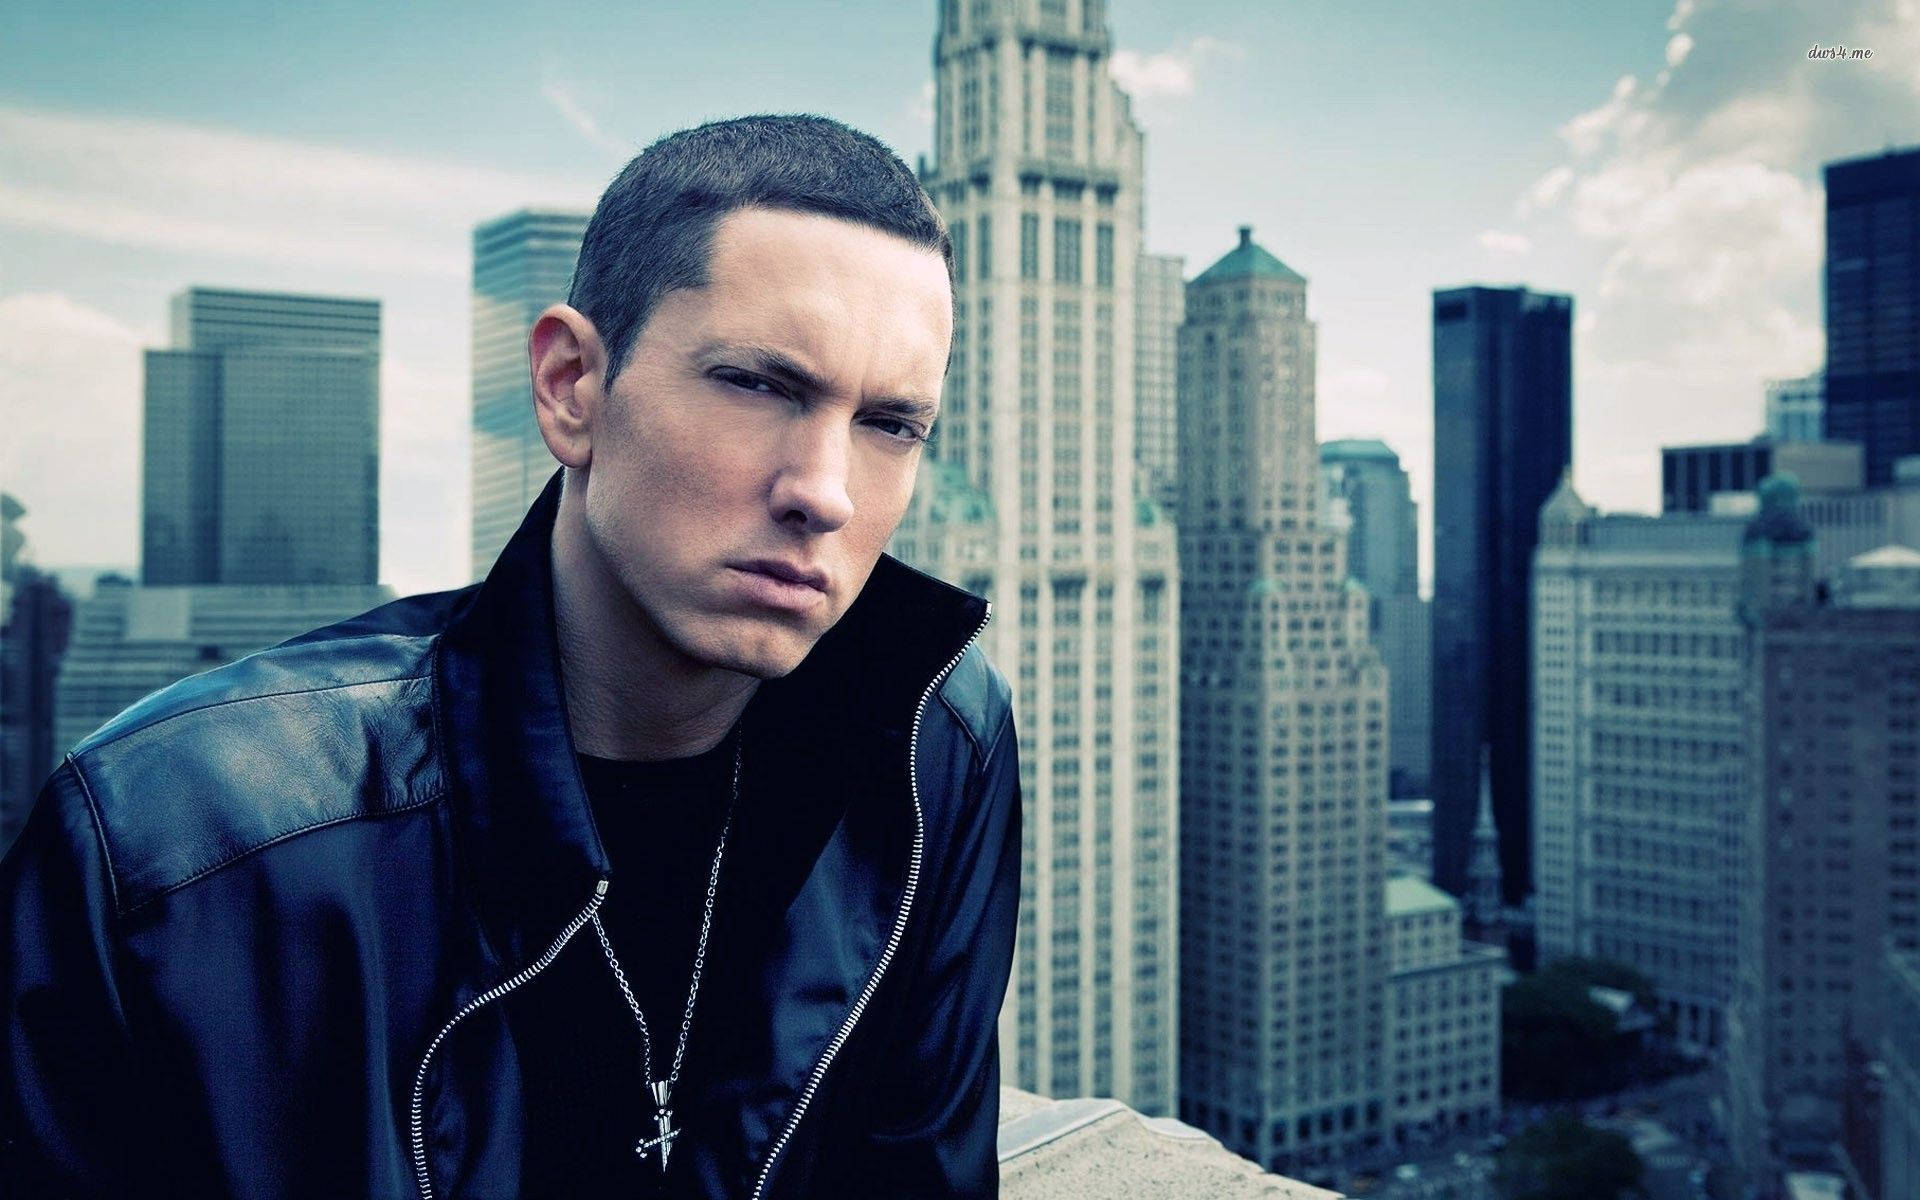 Eminem 1920X1200 Wallpaper and Background Image